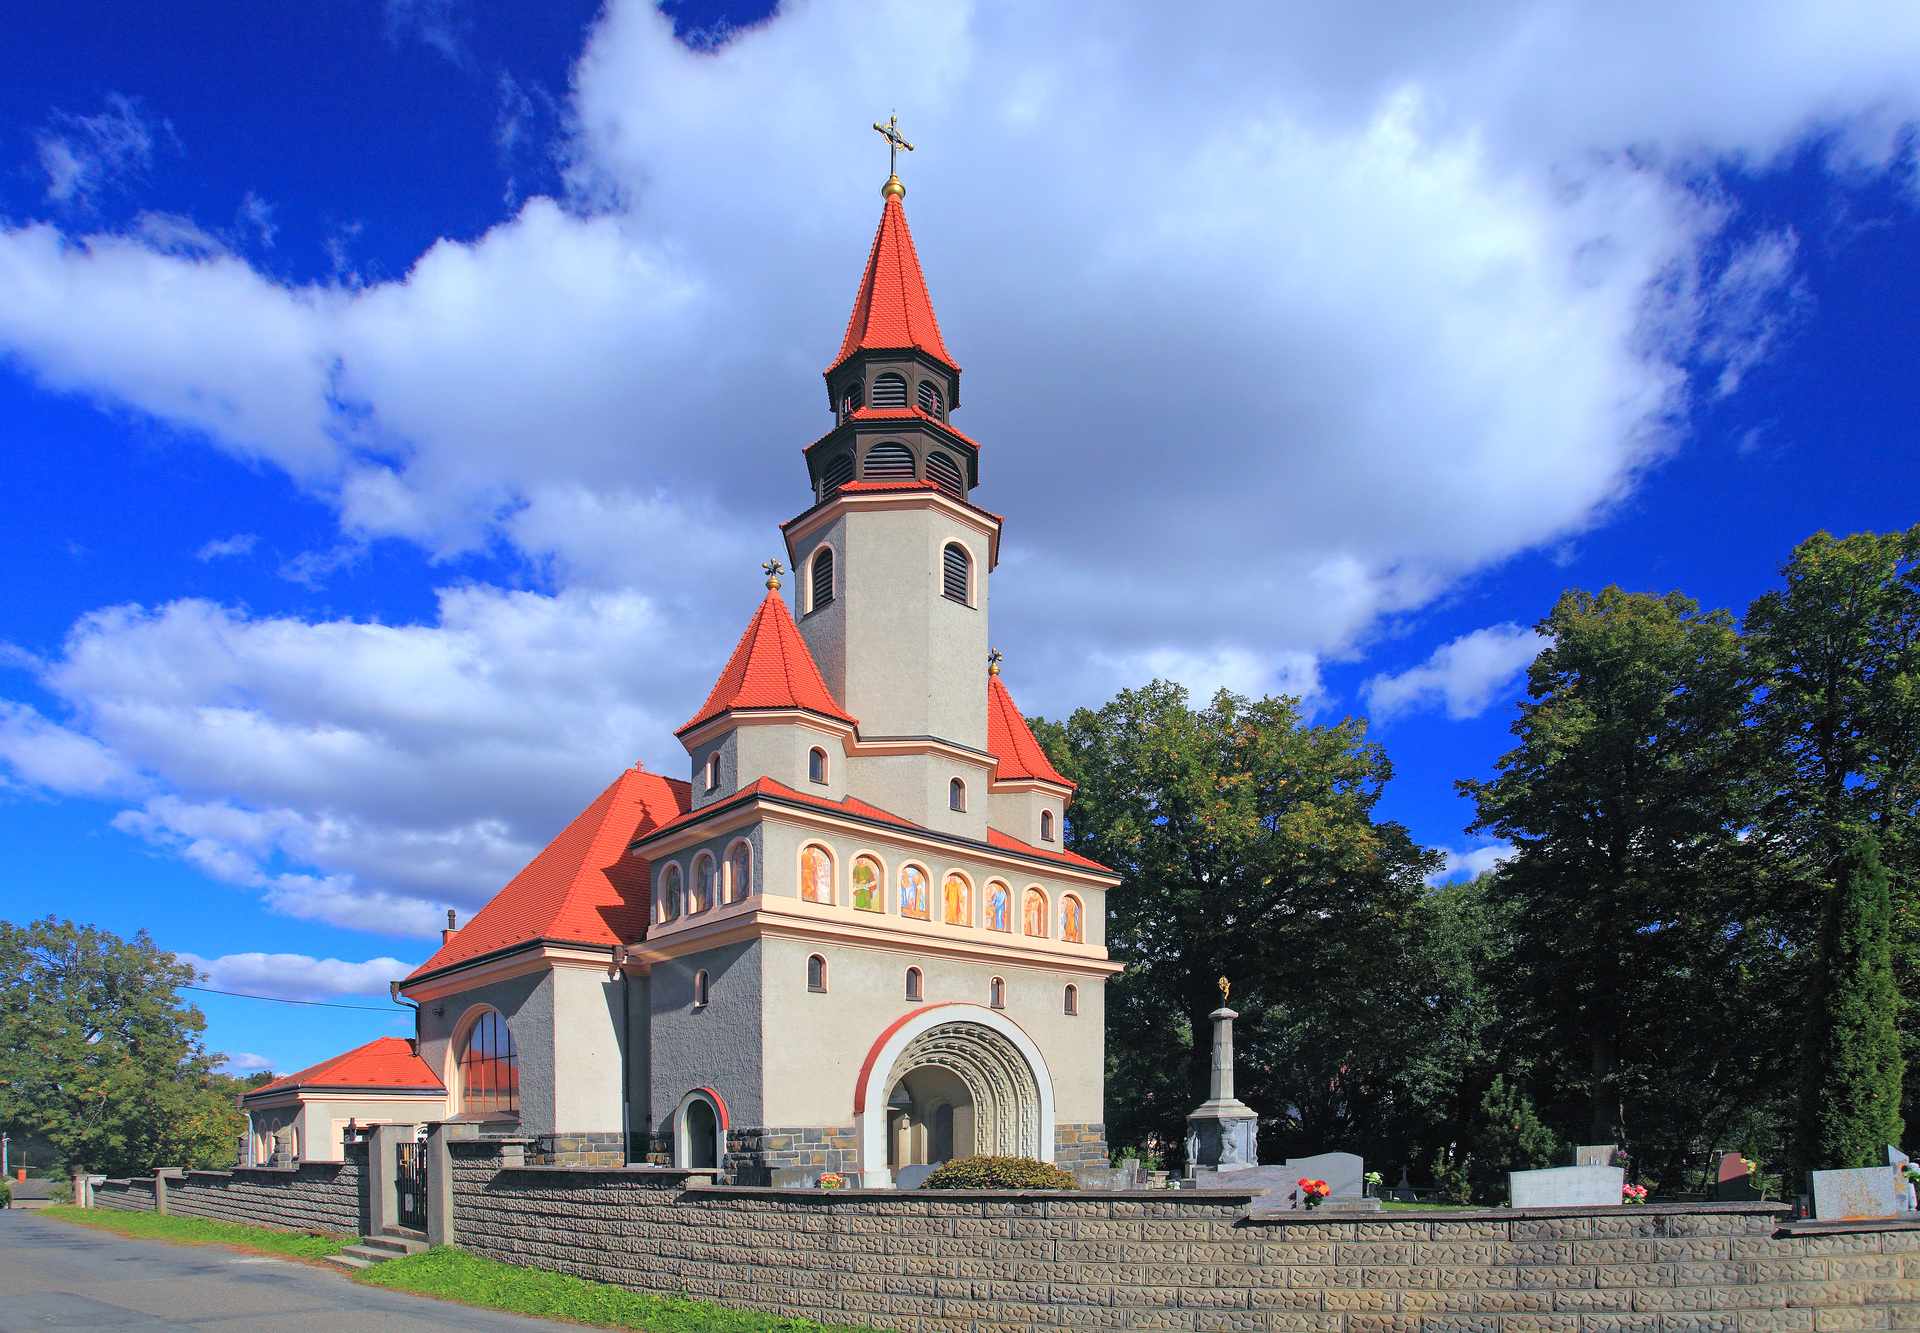 Saint Martin’s Church in Tošovice